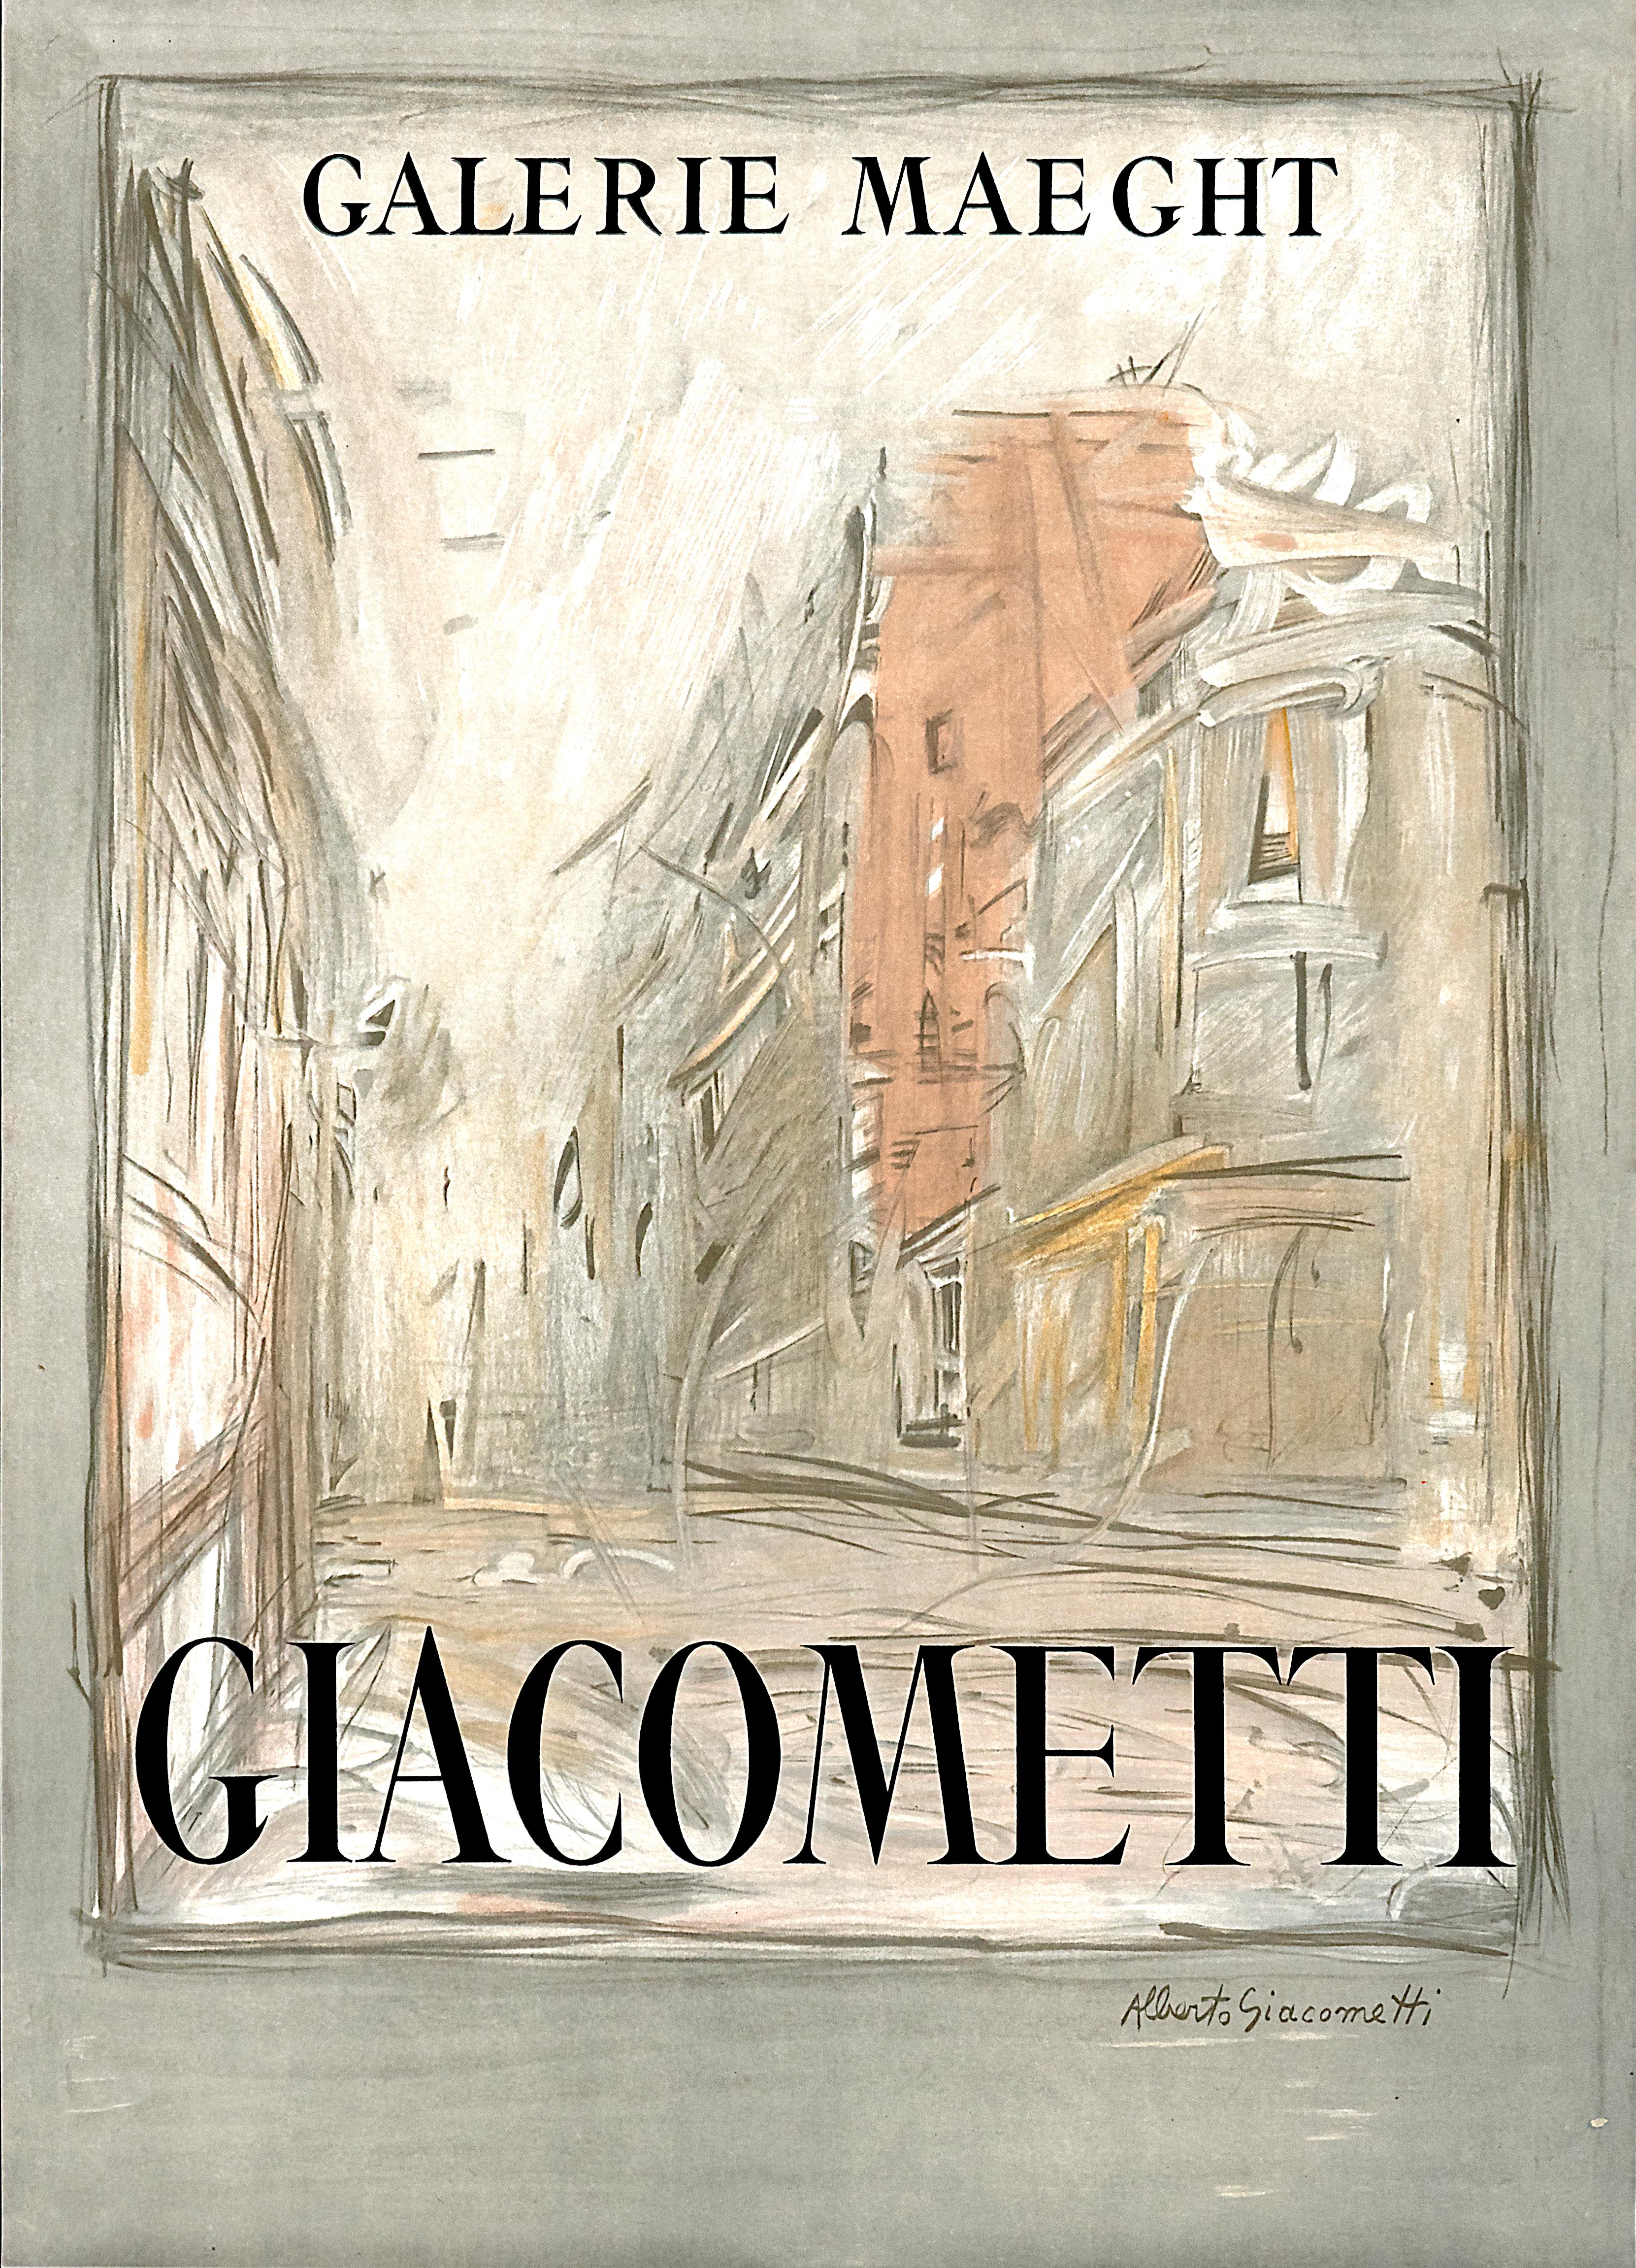 Alberto Giacometti Print - "Giacometti - Galerie Maeght (Painting)" Original Vintage Art Exhibition Poster